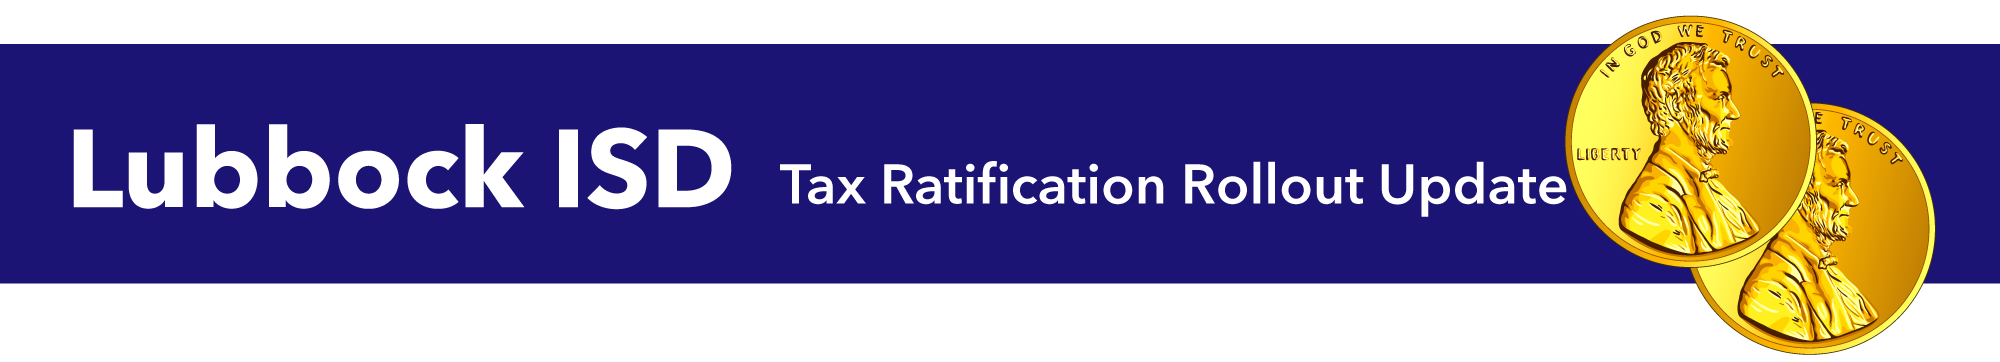 Tax Ratification Election (TRE) Informat bannerion